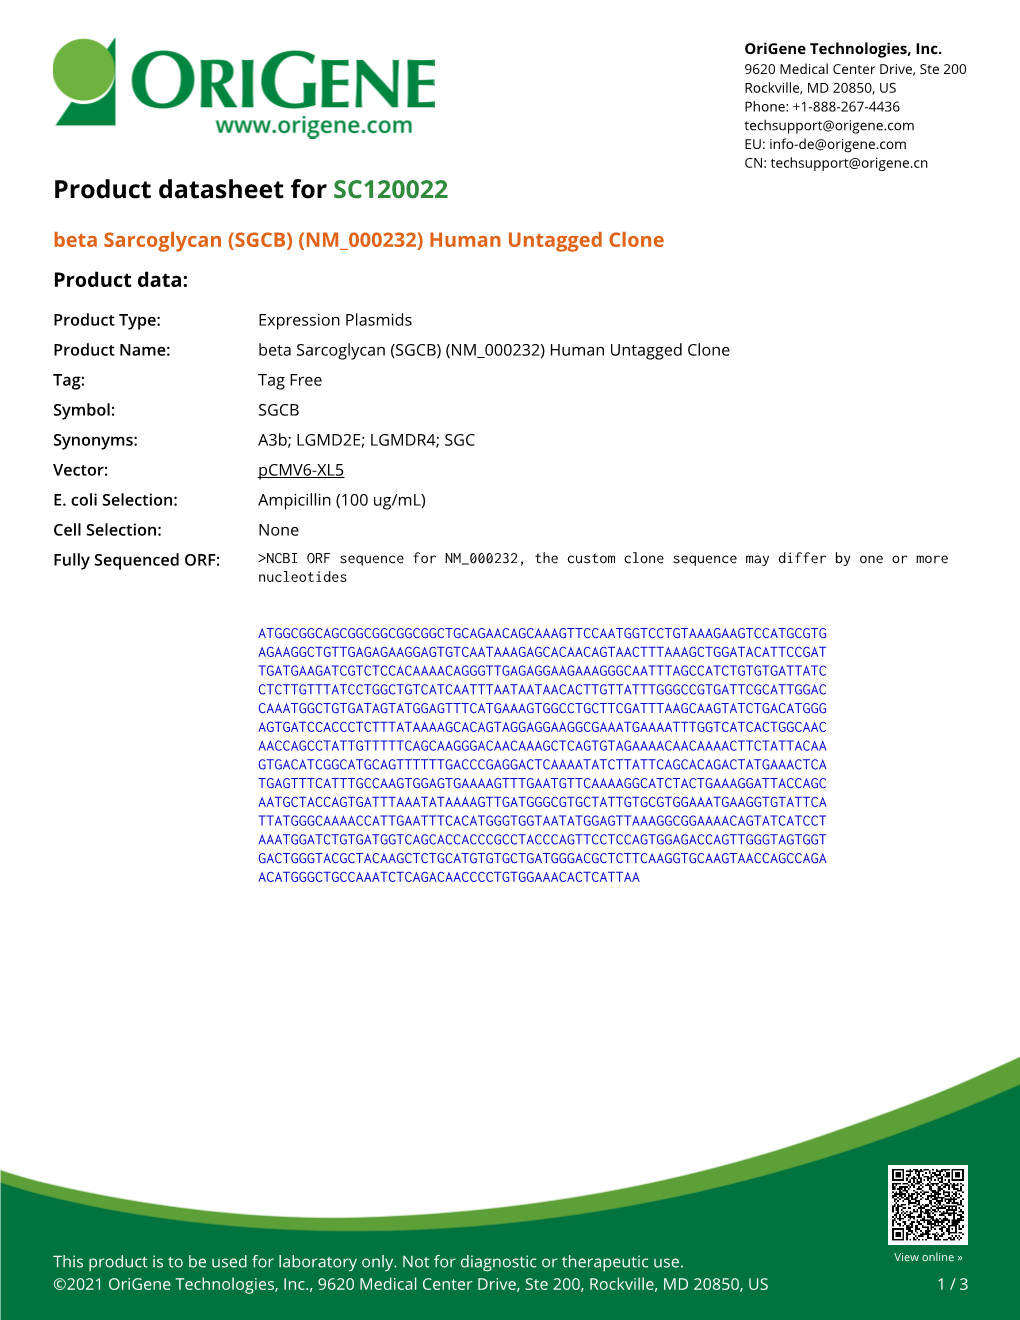 Beta Sarcoglycan (SGCB) (NM 000232) Human Untagged Clone Product Data